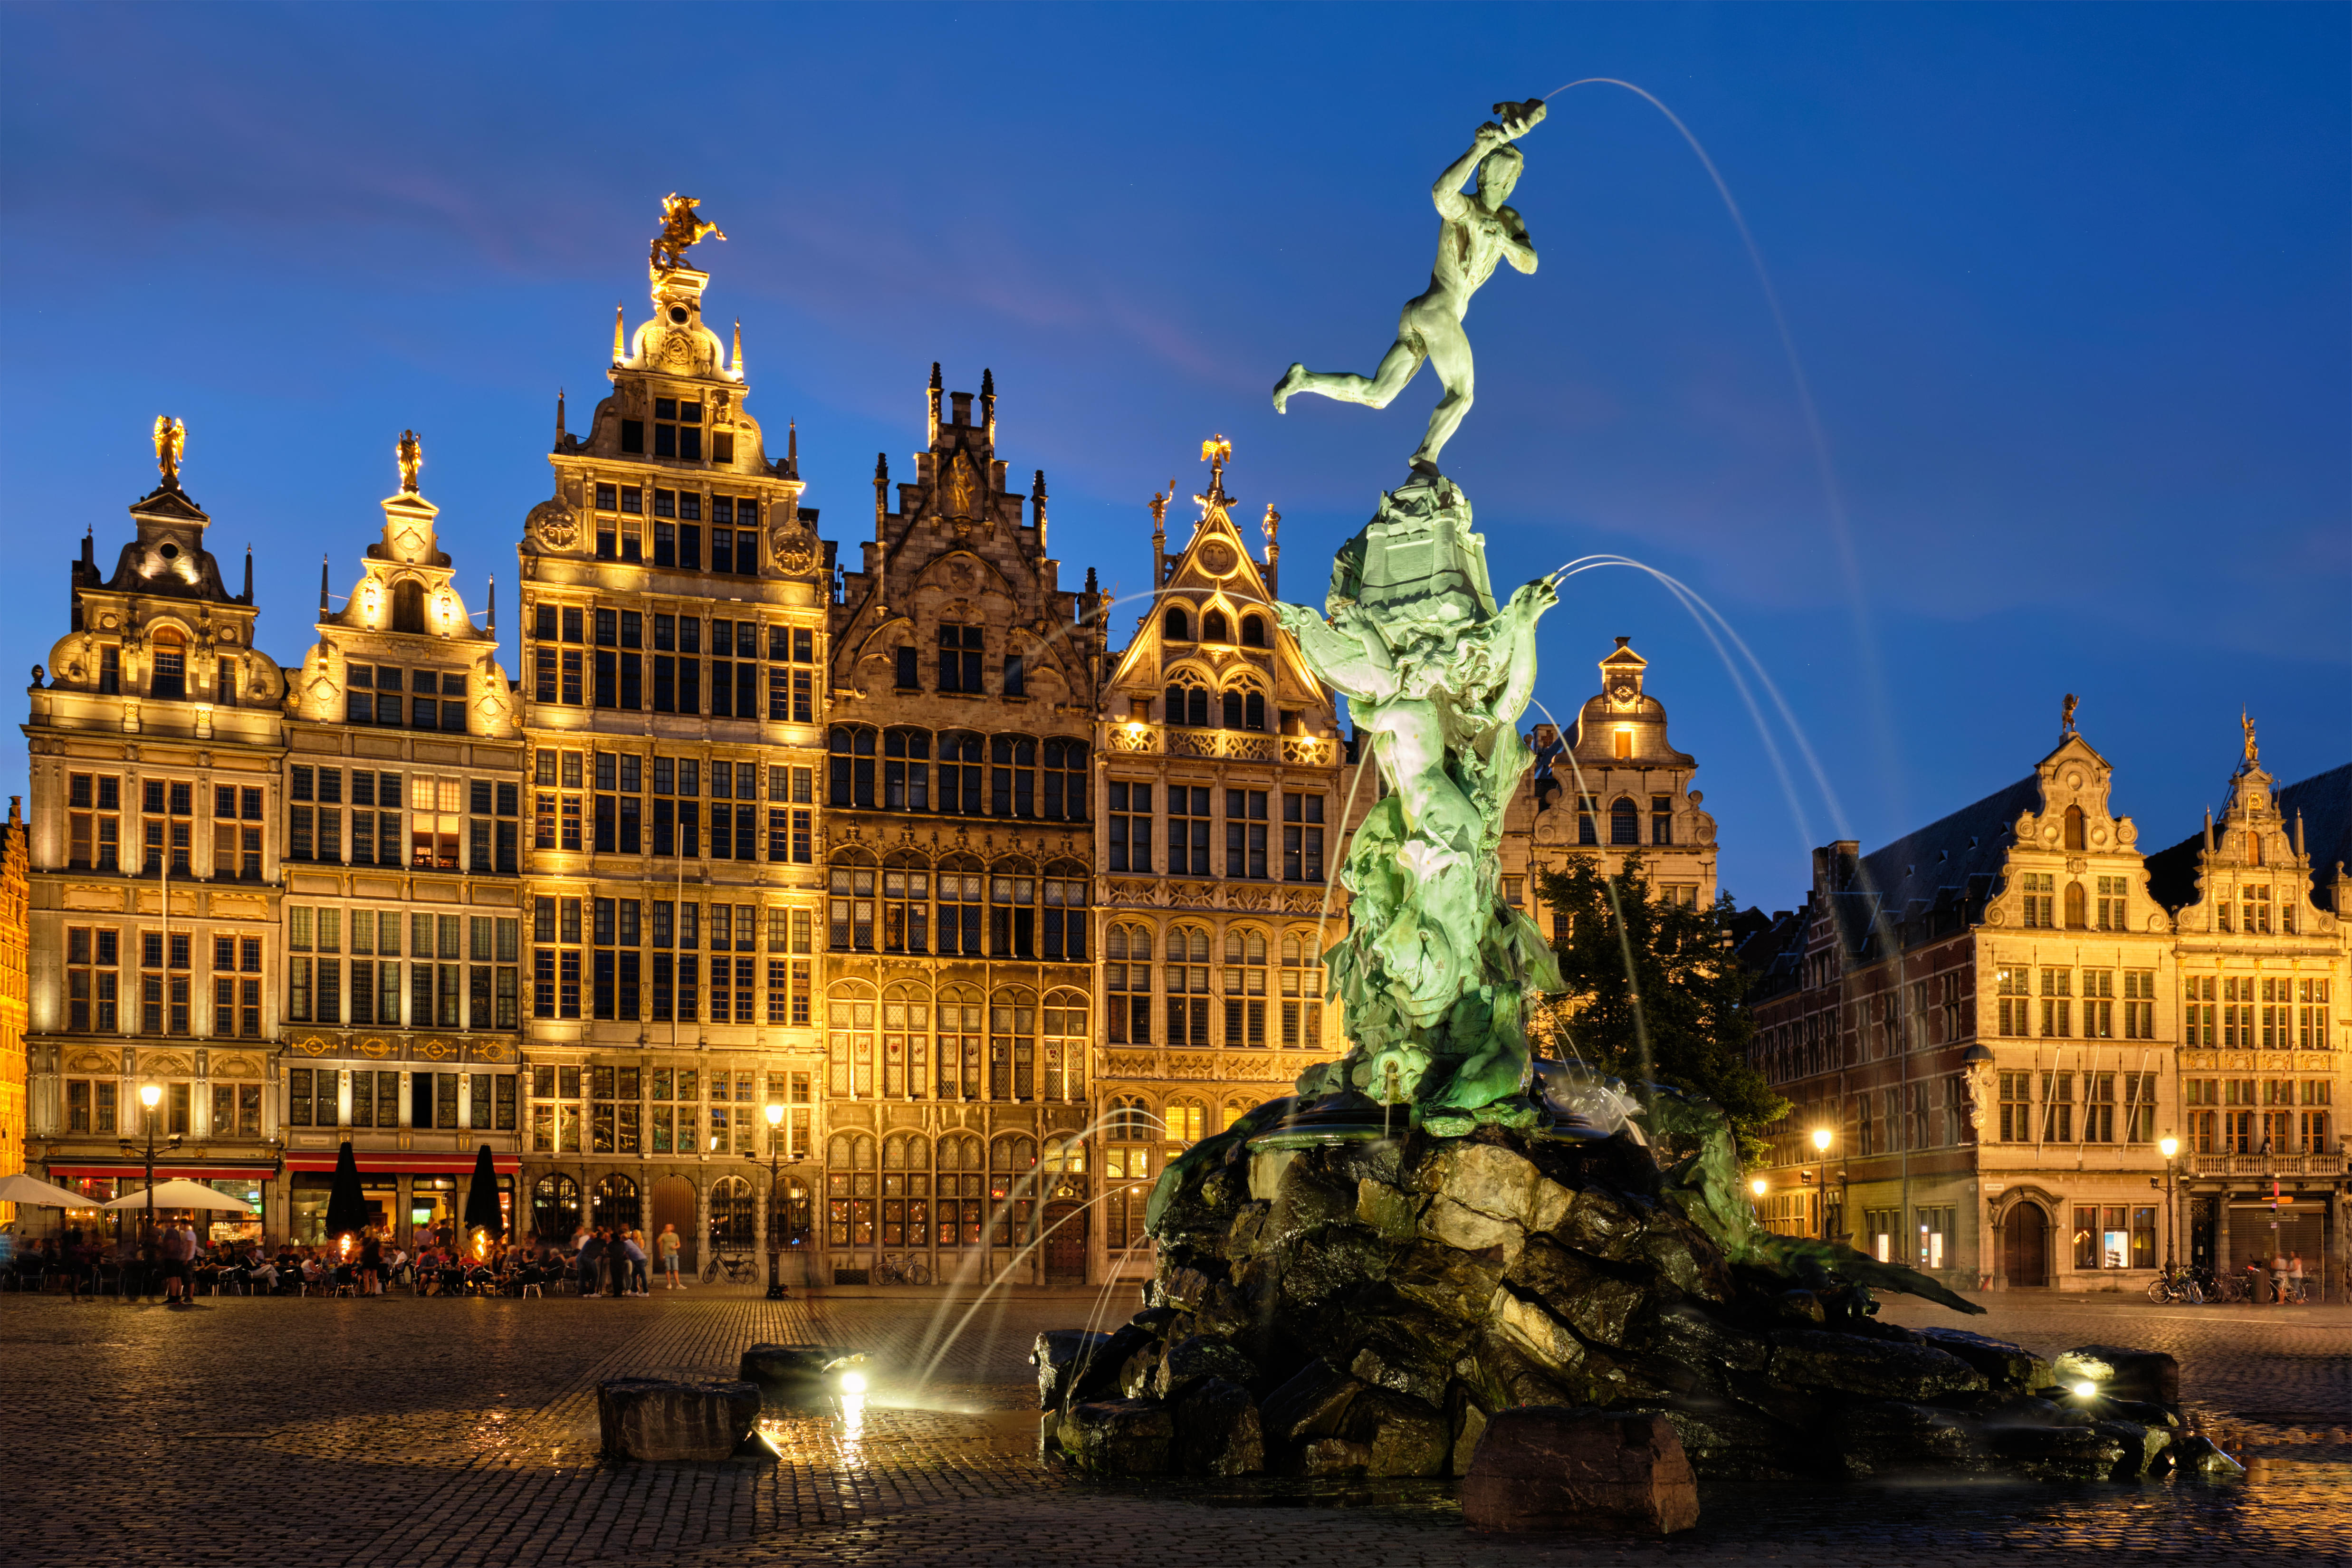 Brabo statue, Antwerp